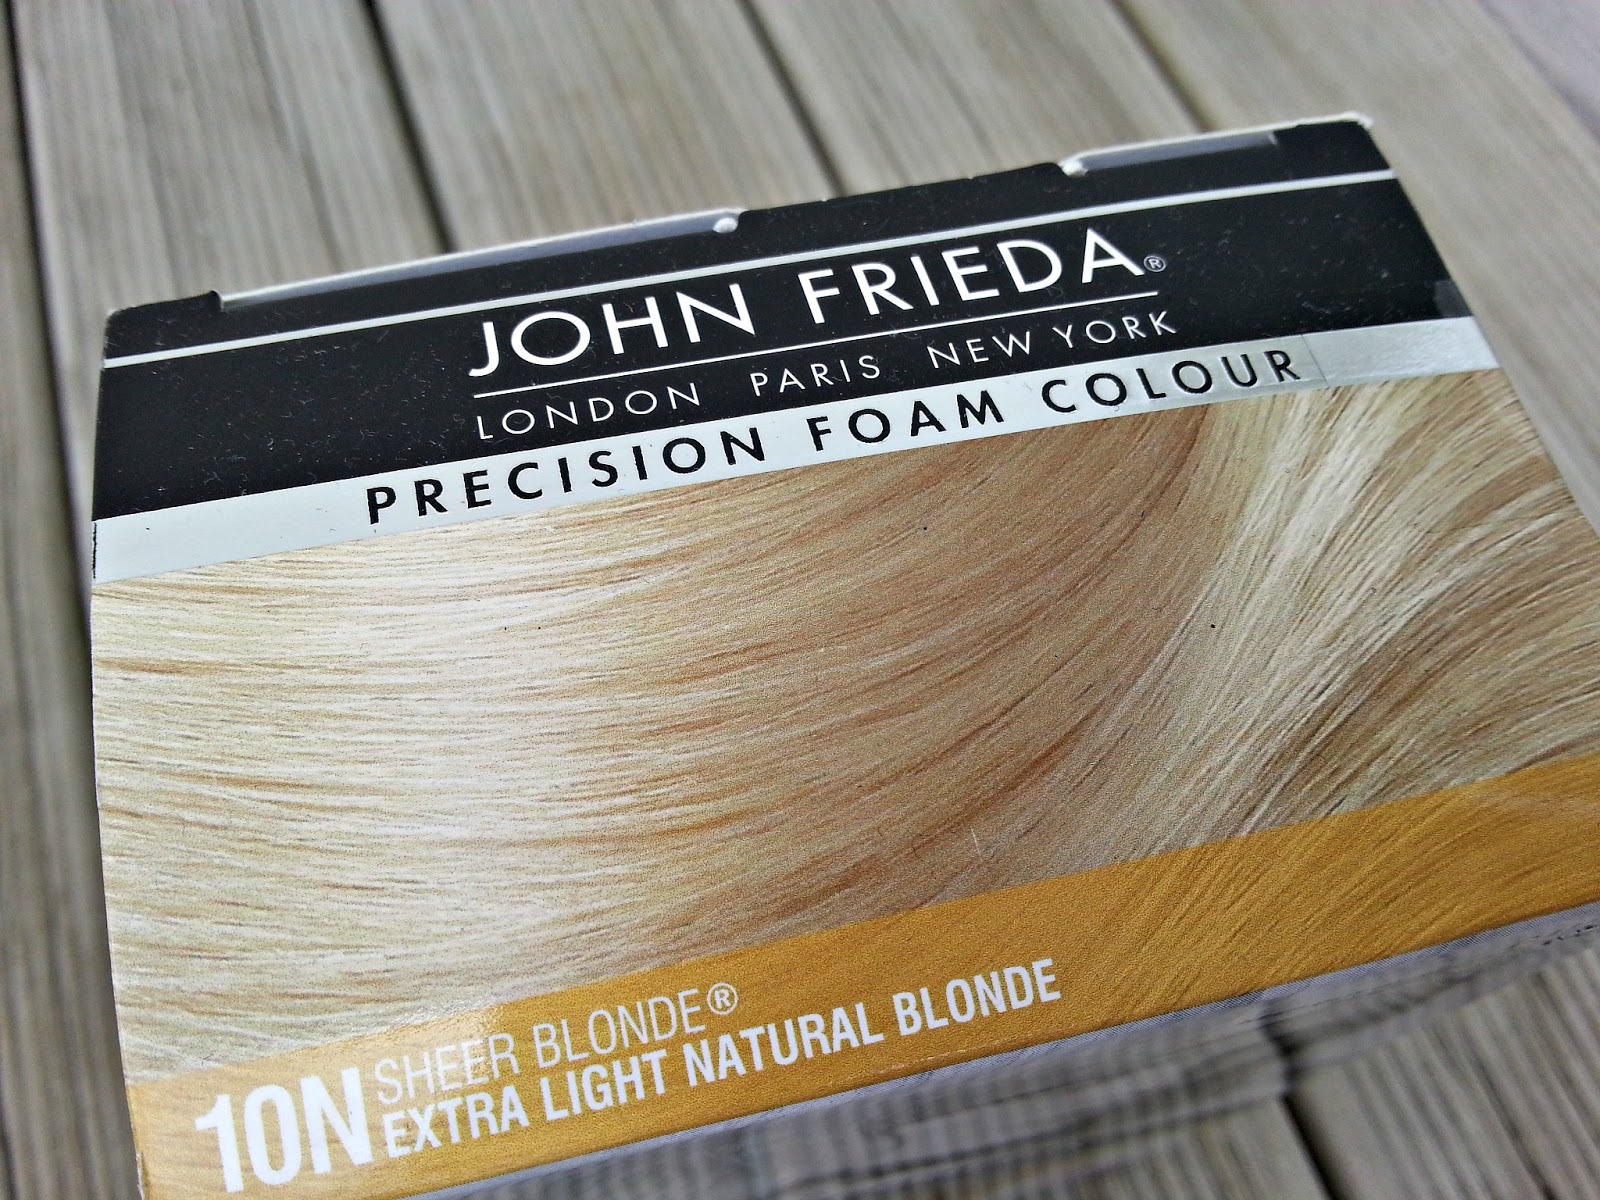 6. John Frieda Precision Foam Colour, 72hrs Blonde - wide 10